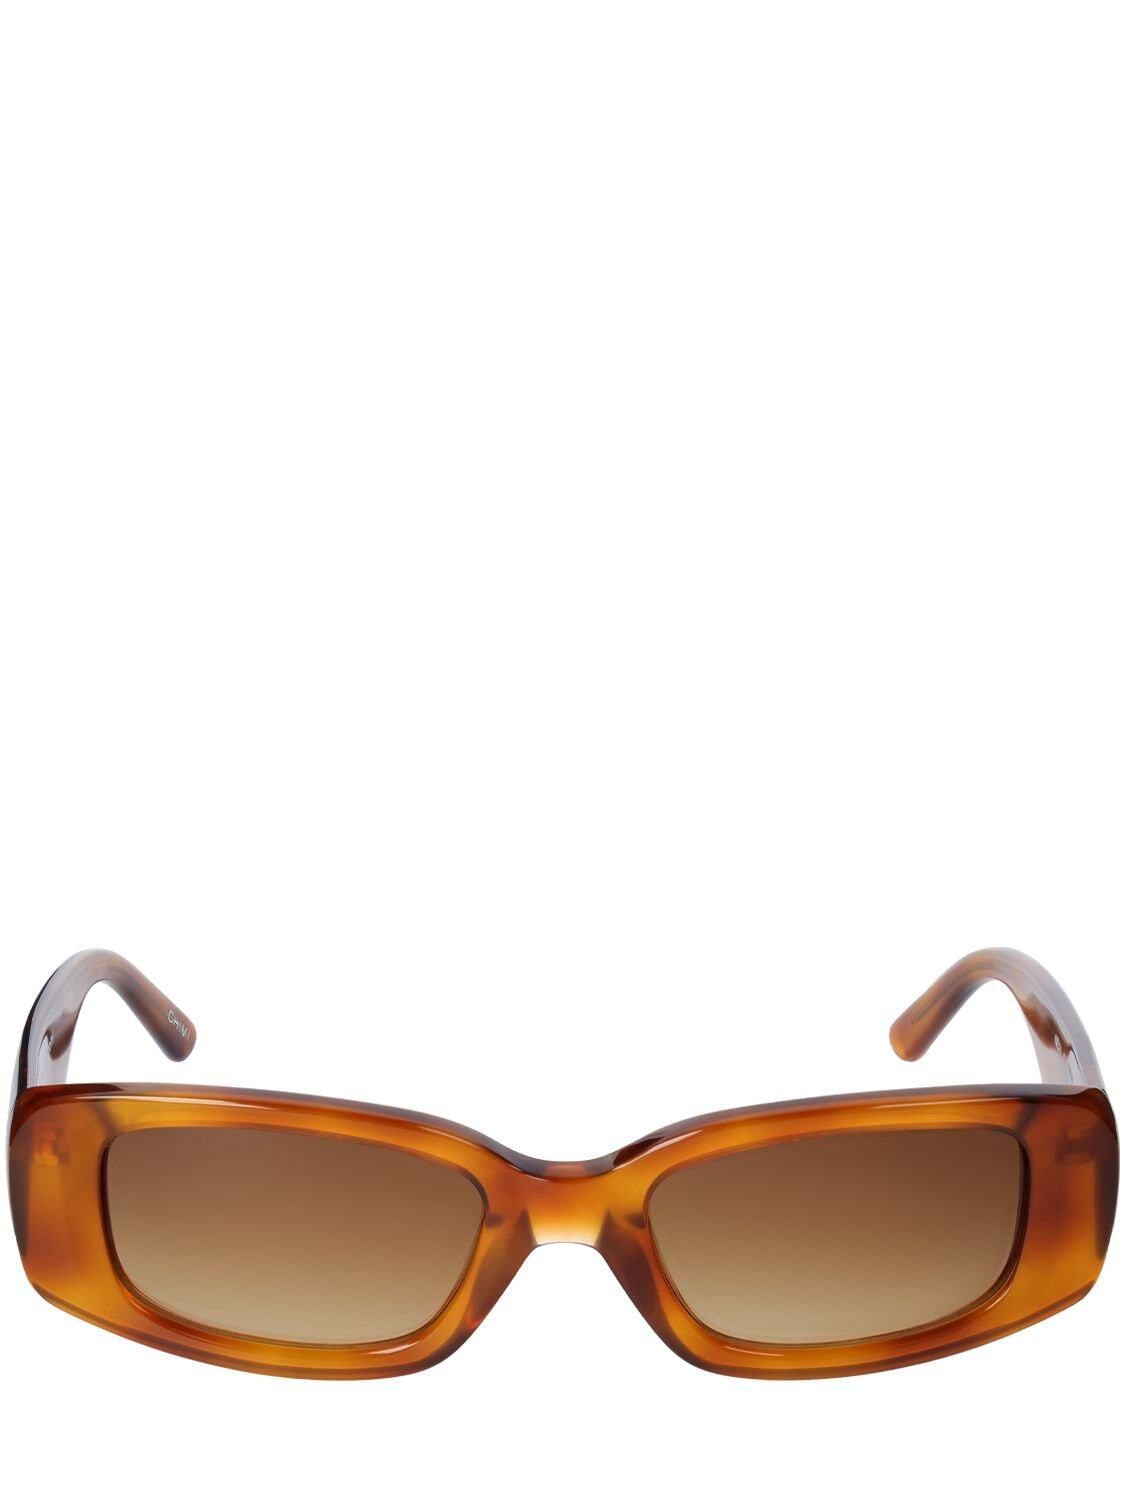 CHIMI 10.2 Squared Acetate Sunglasses in brown